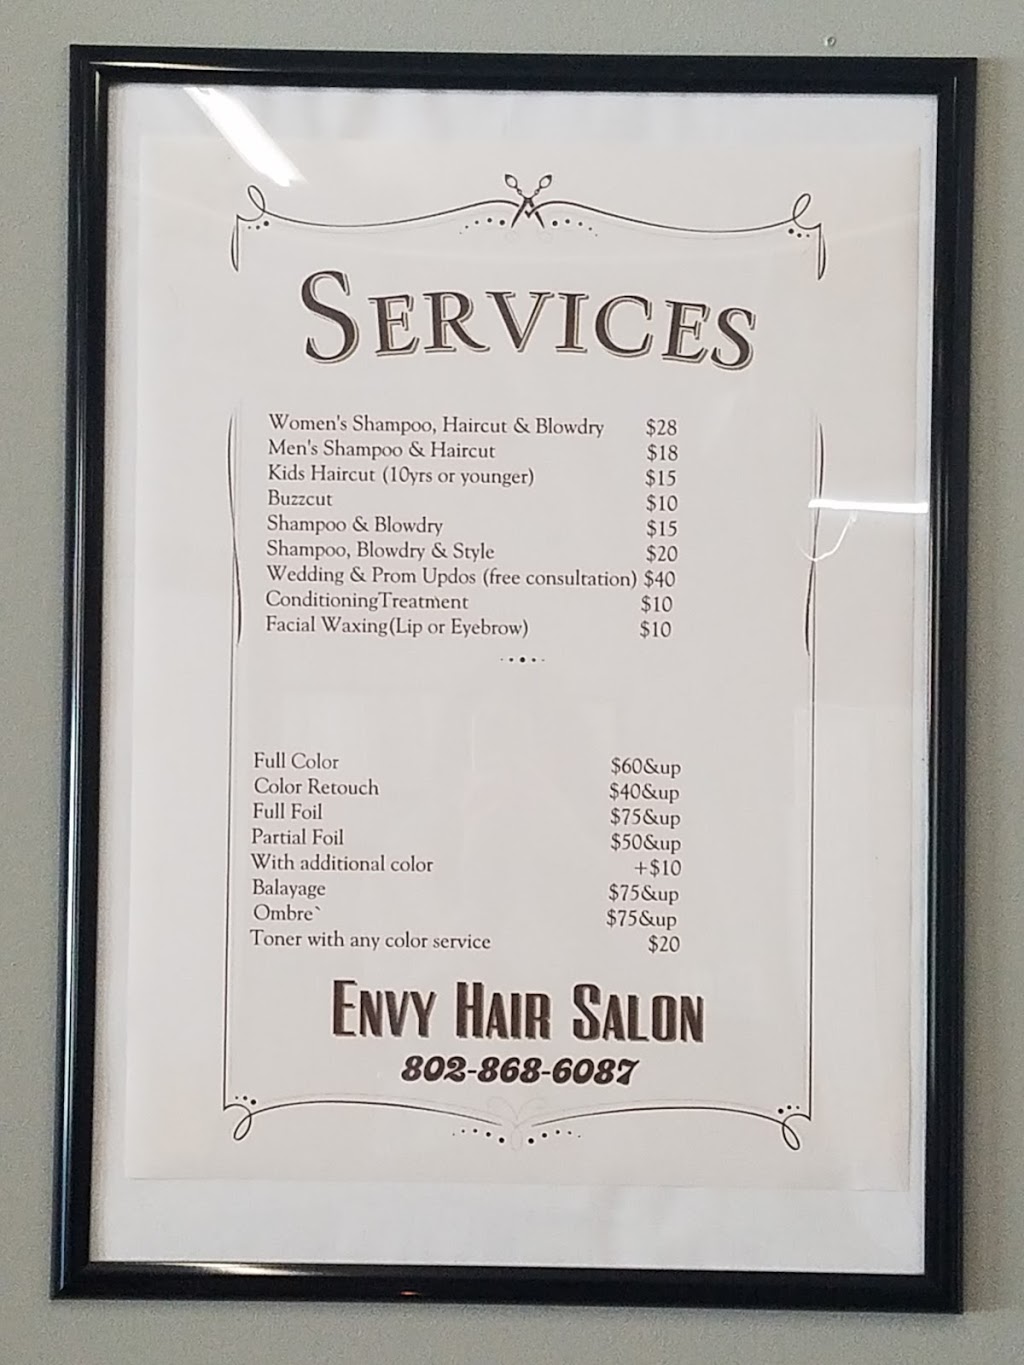 Envy Hair Salon | hair care | 20 Merchant Row, Swanton, VT 05488, USA | 8028686087 OR +1 802-868-6087